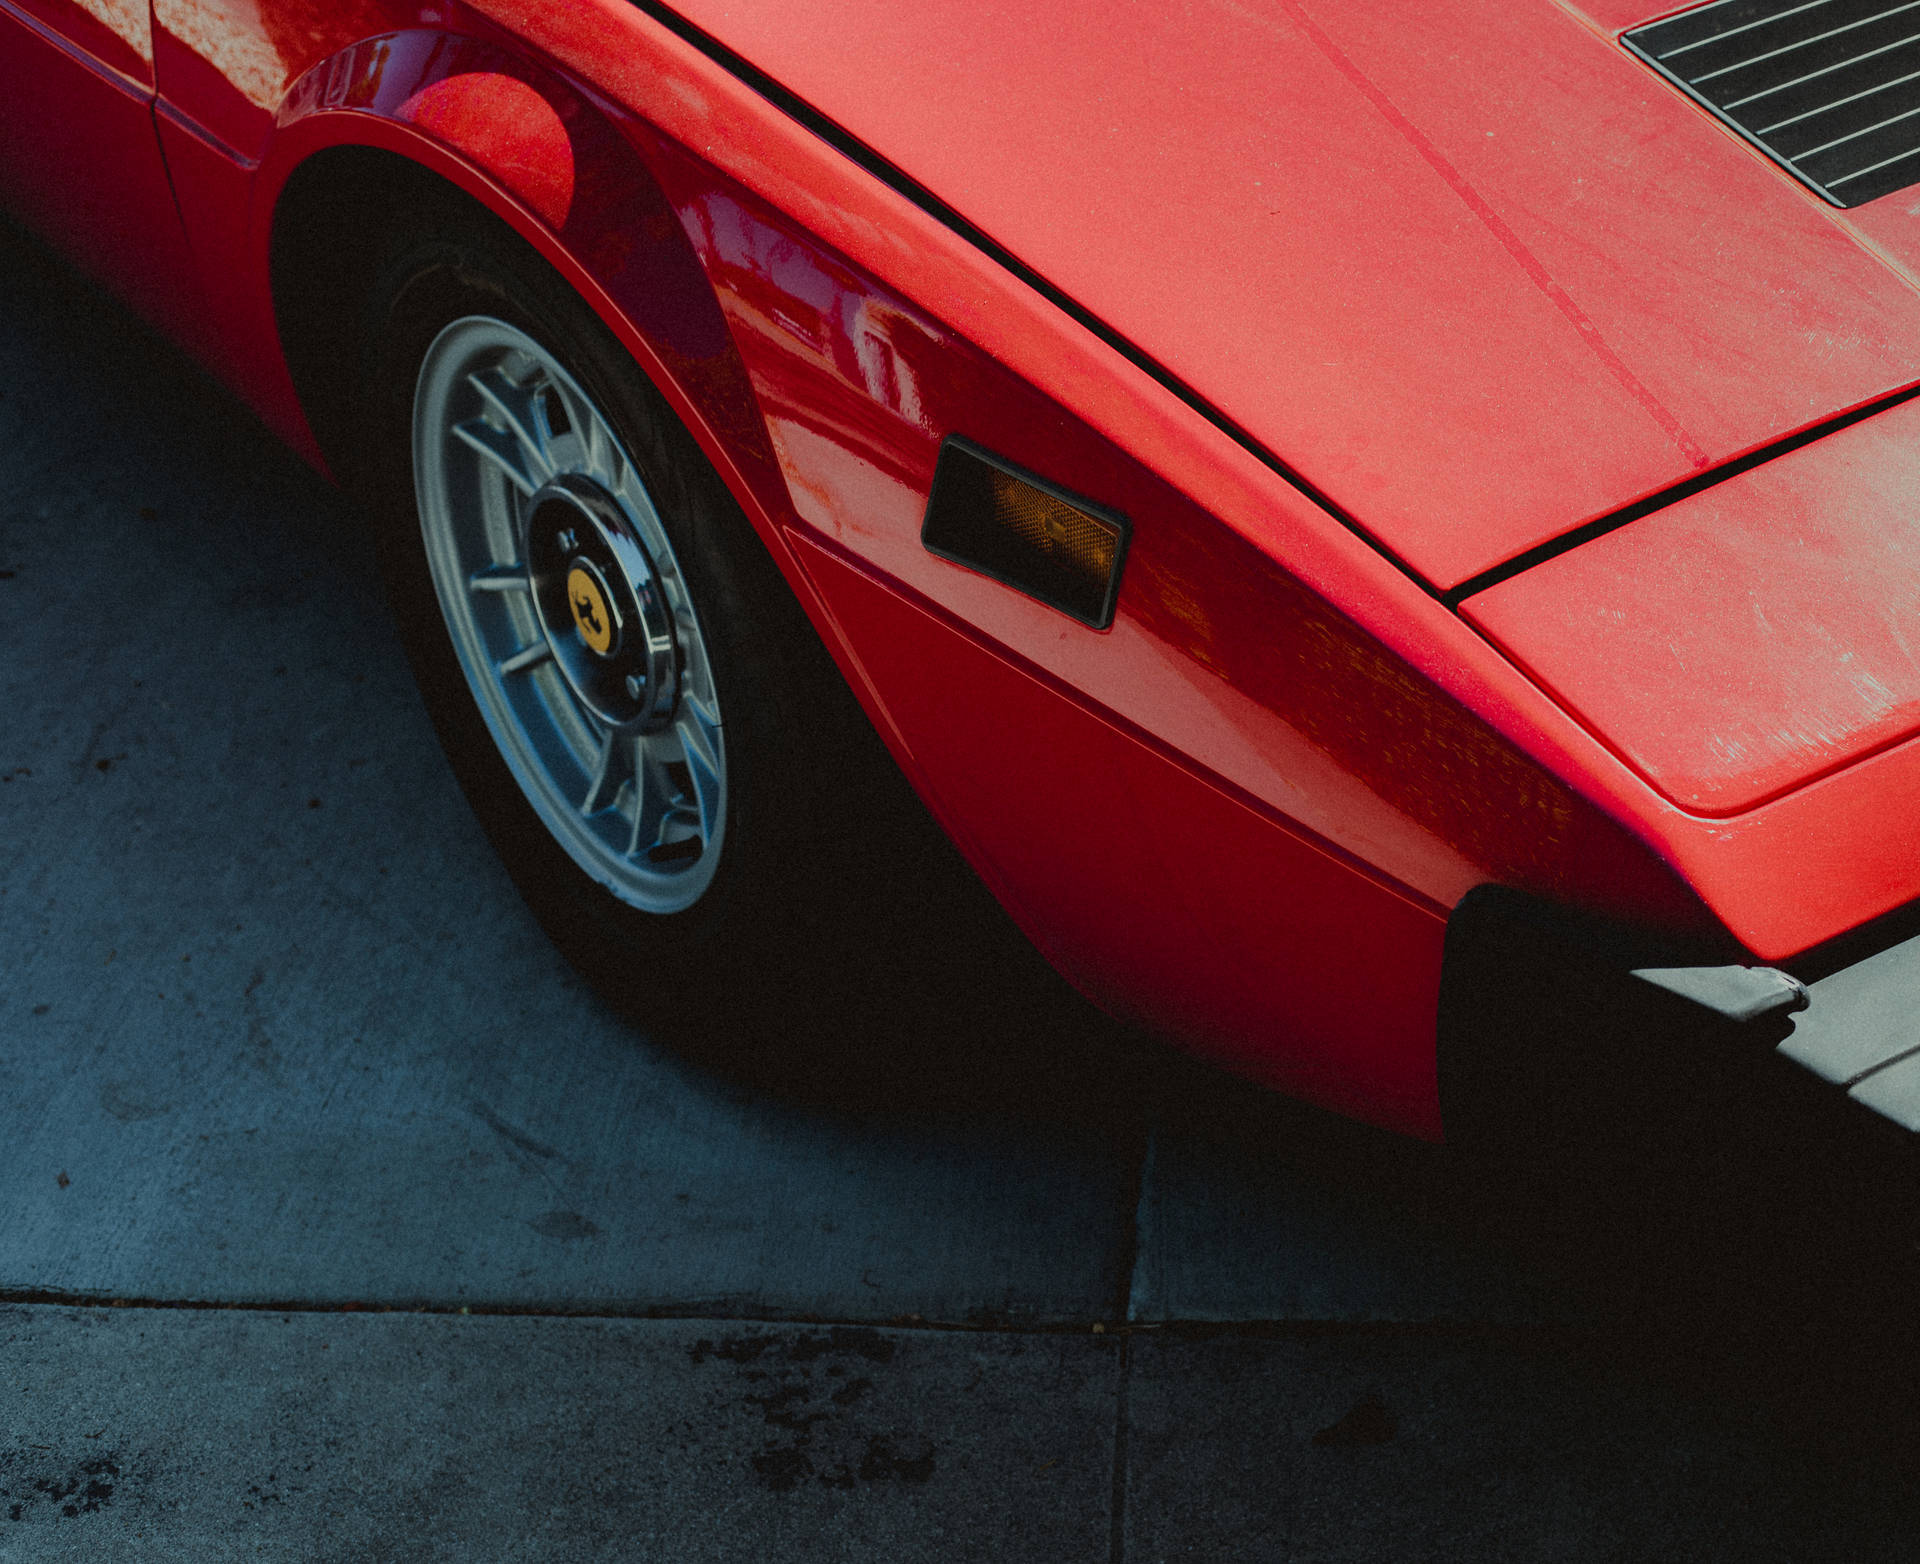 Red Ferrari Rear Wheel Background